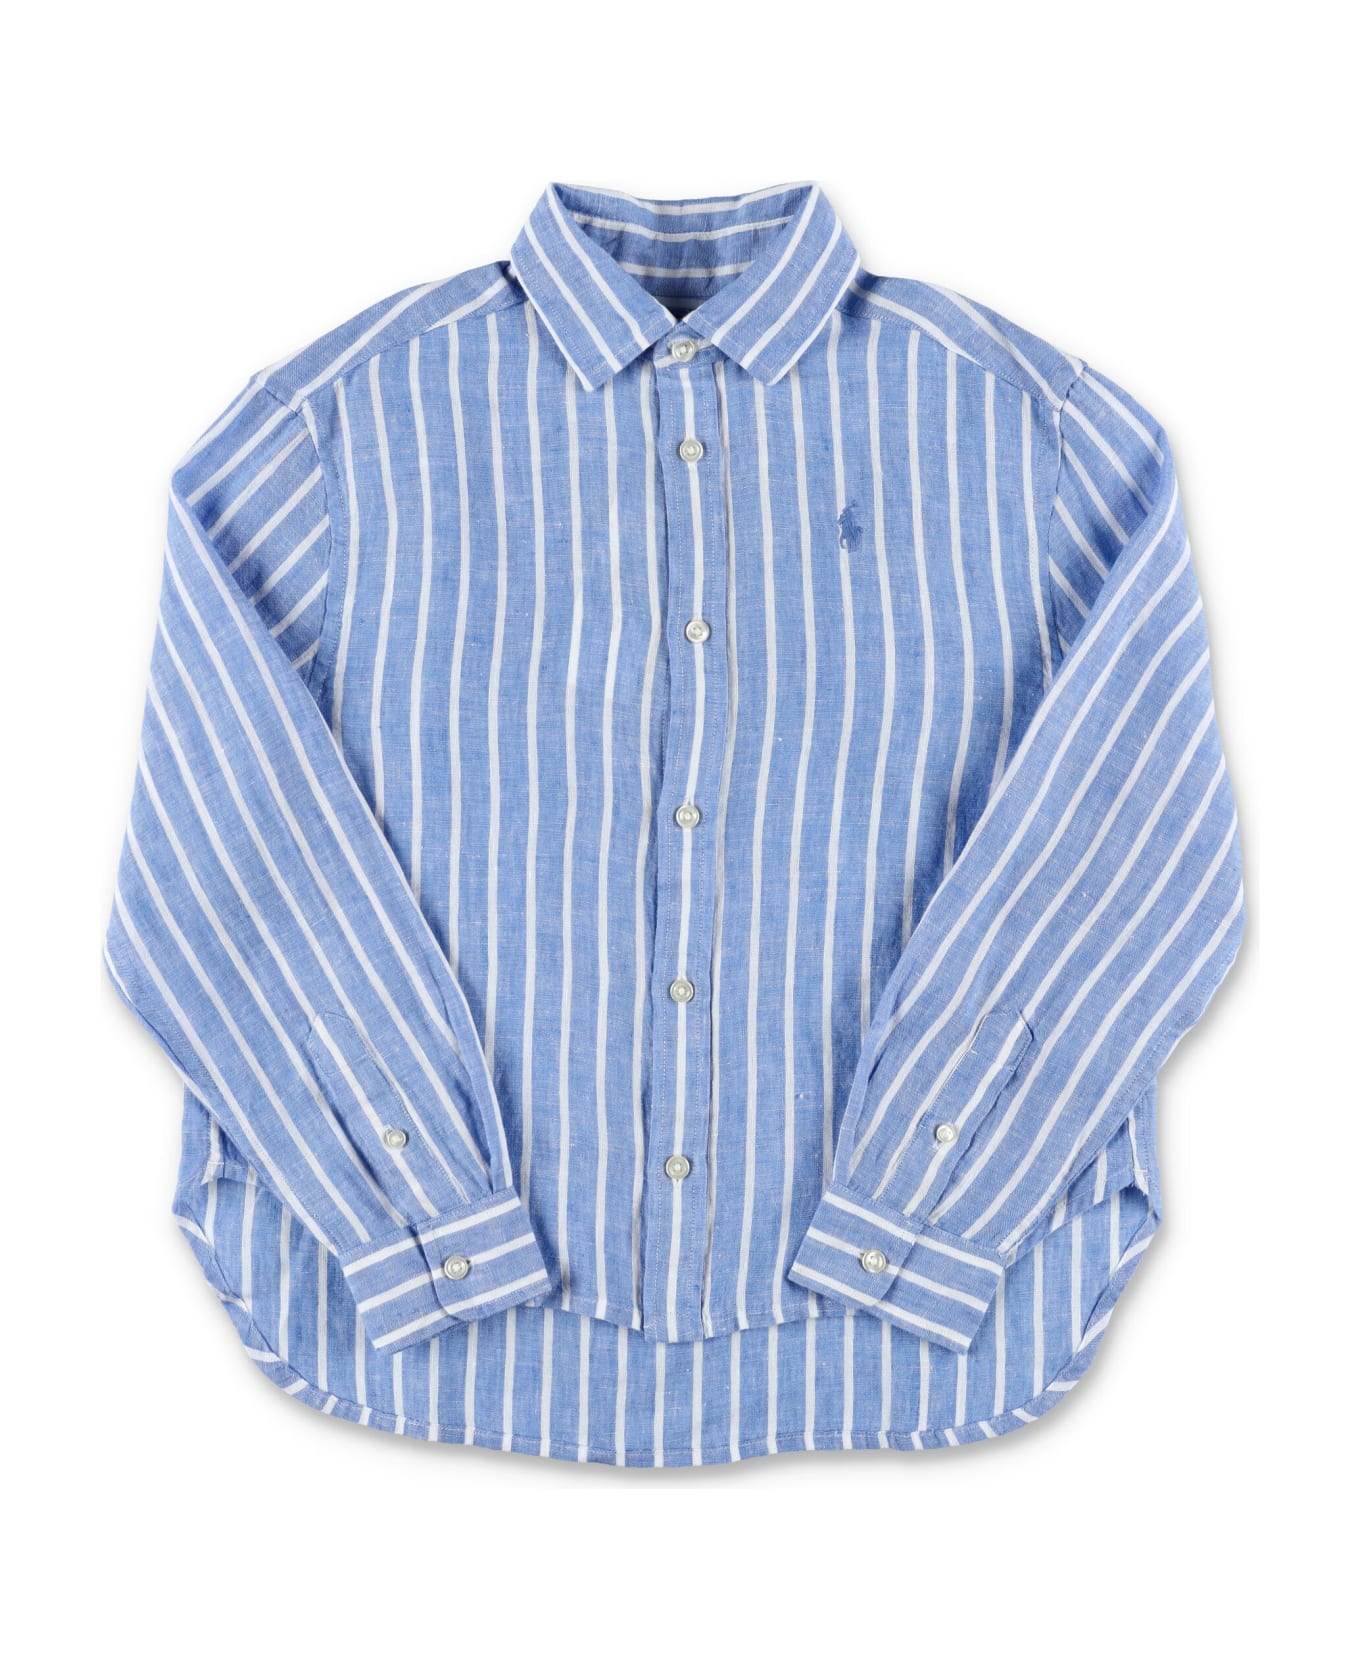 Polo Ralph Lauren Striped Linen Shirt - Celeste